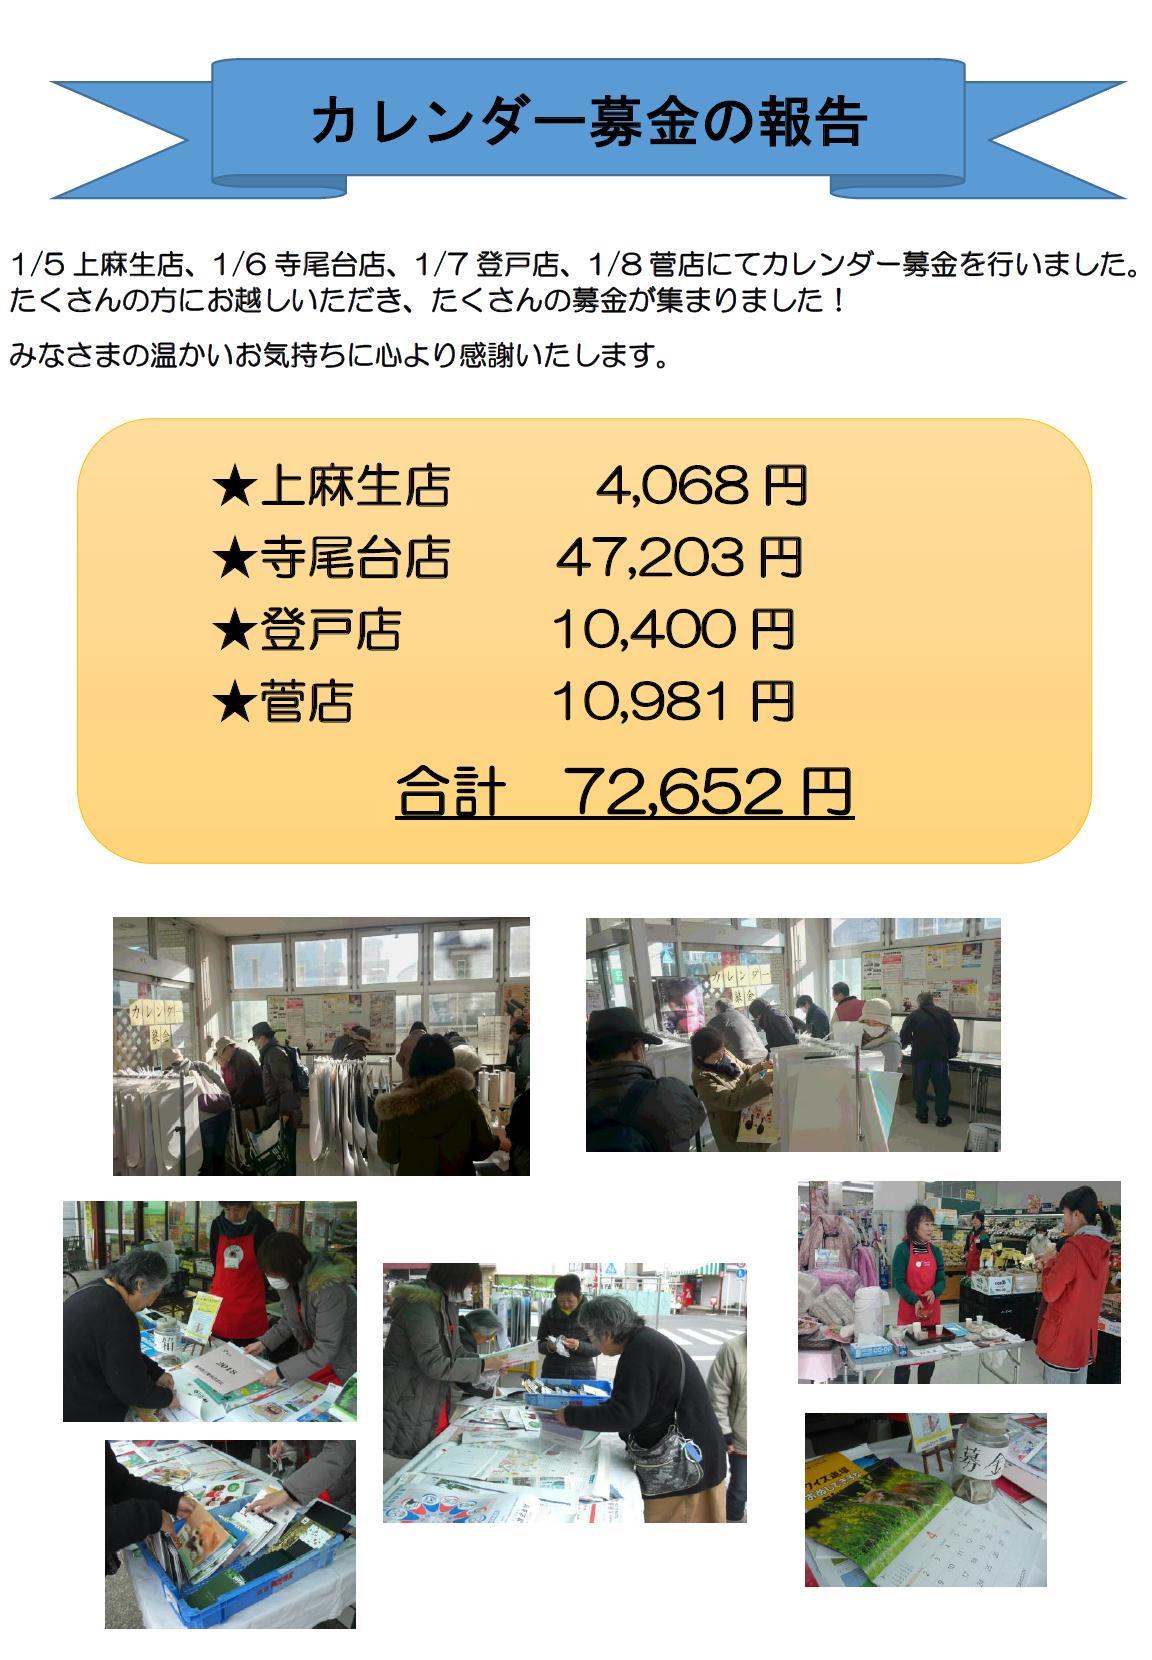 http://kanagawa.ucoop.or.jp/hiroba/areanews/files/2018%20calender-kawasakiarea2.jpg